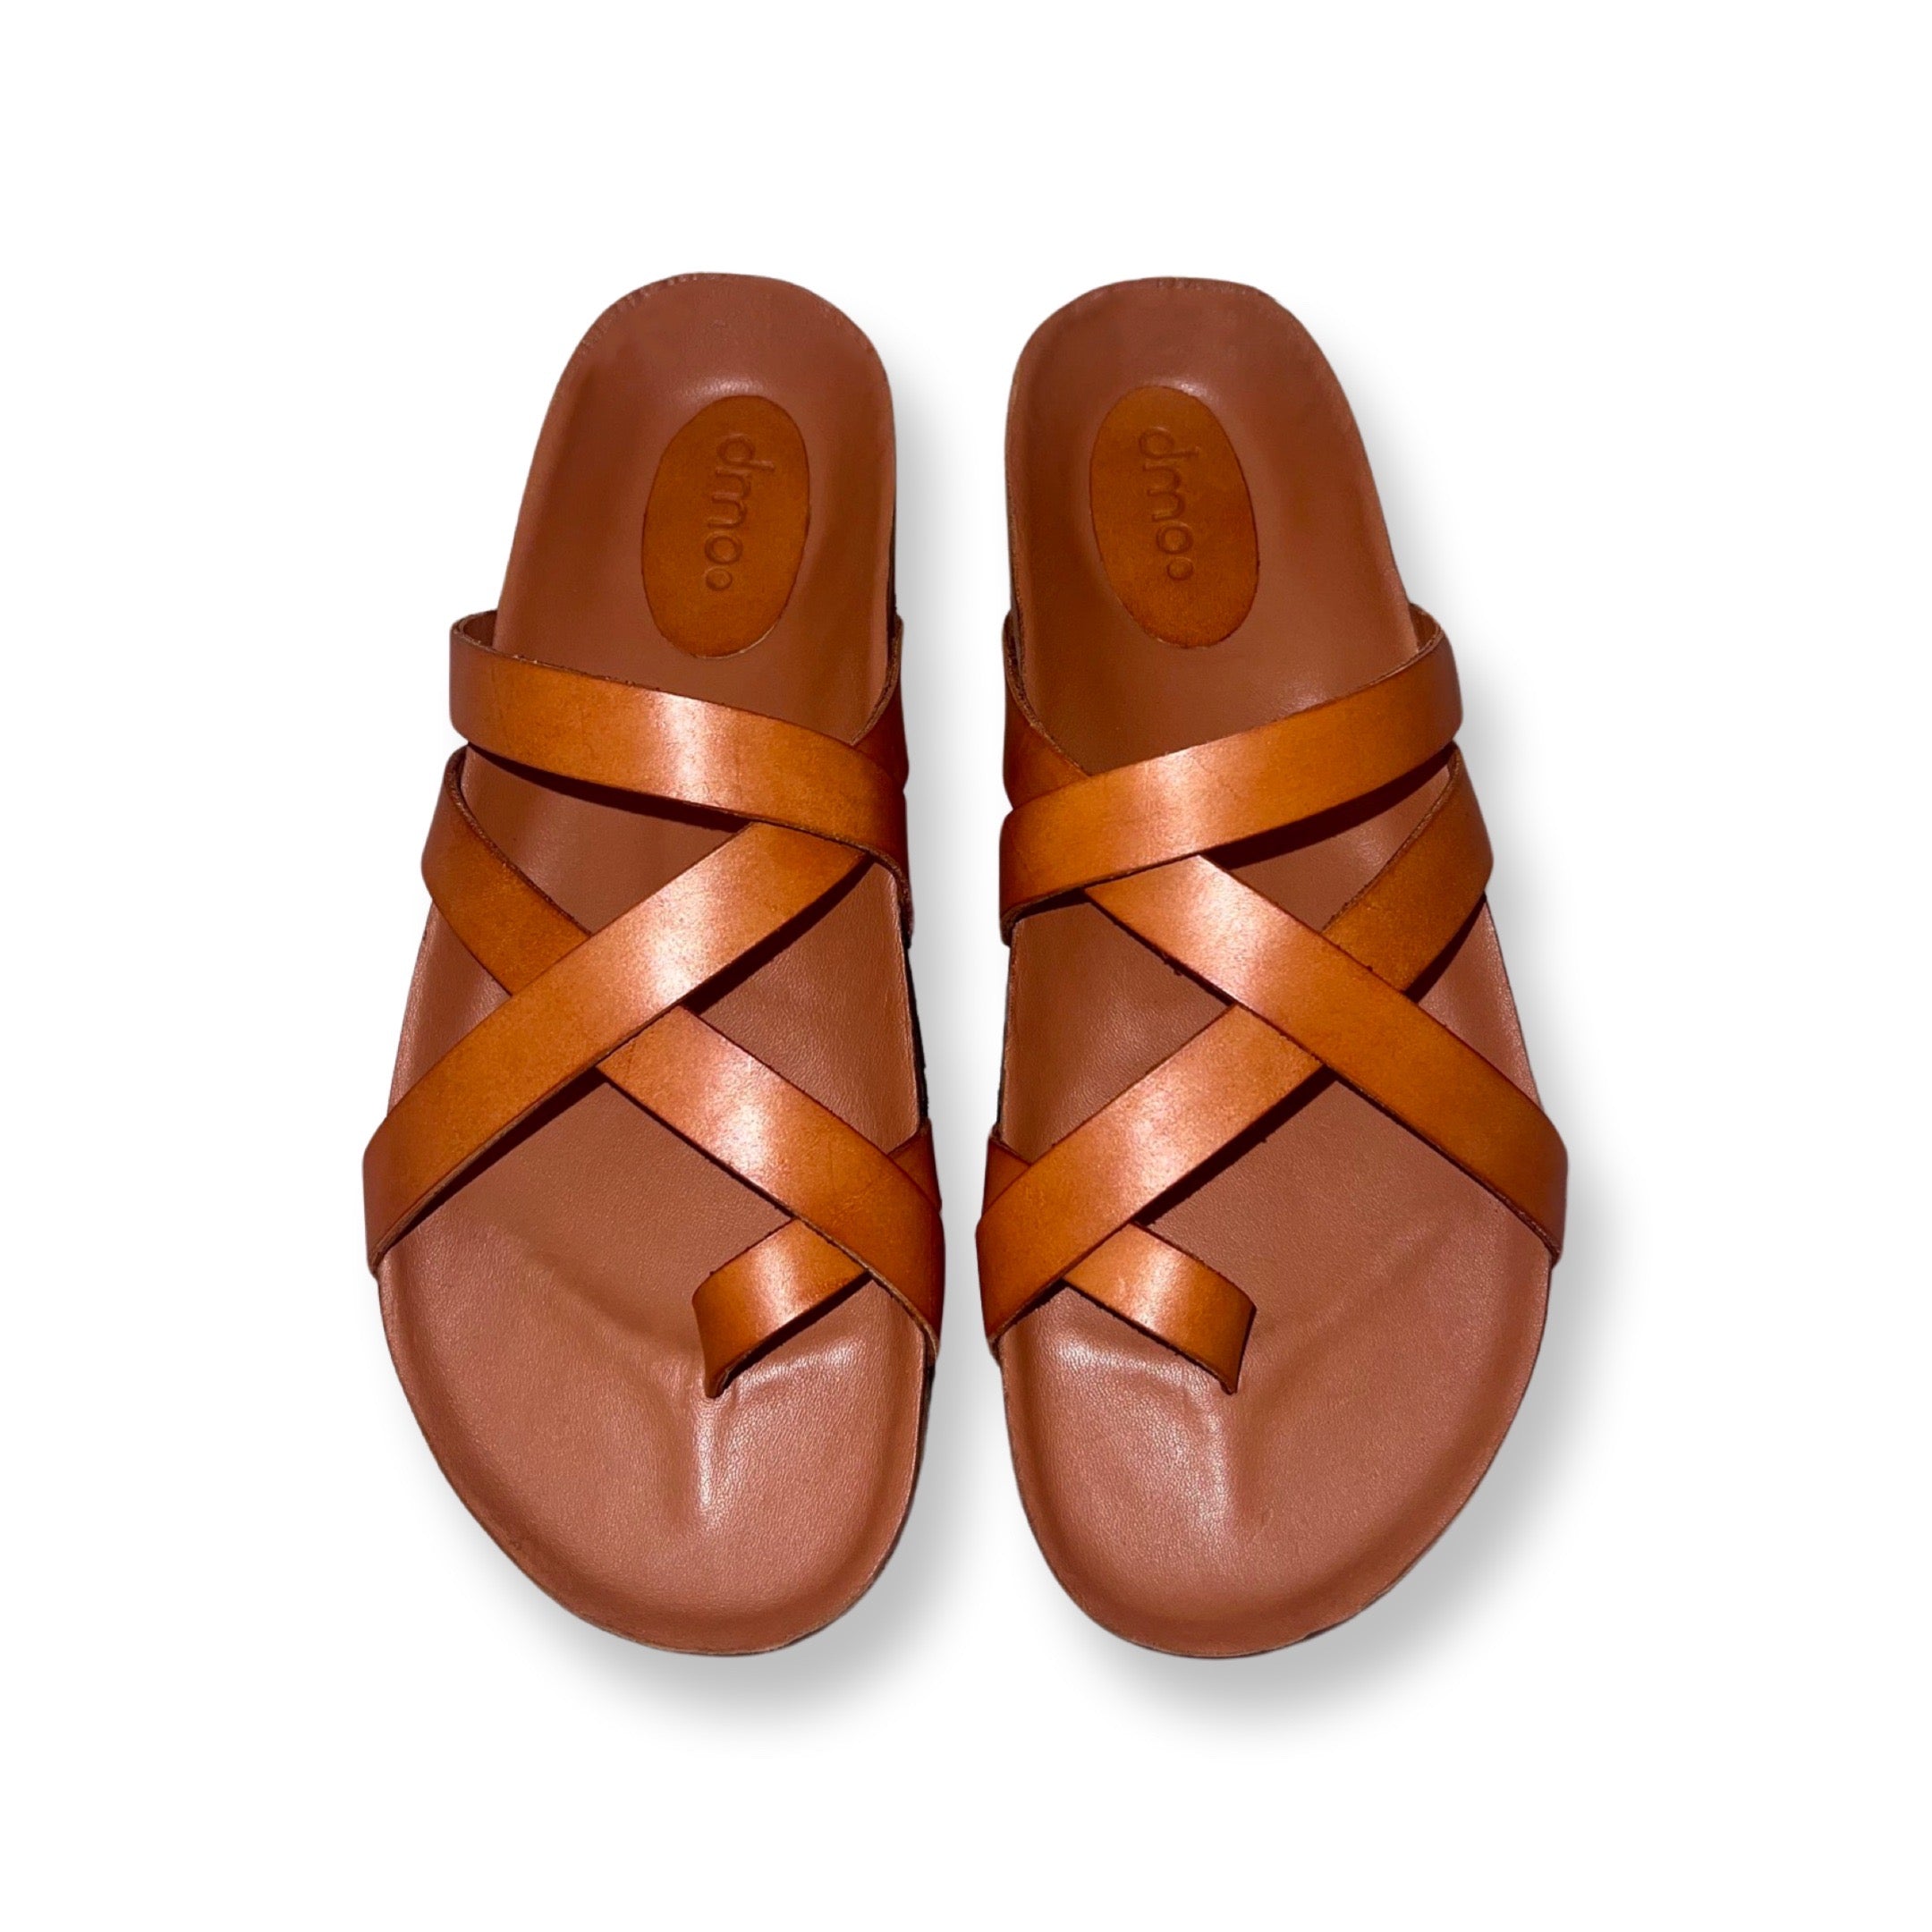 Elegant Pelle Corko Cappuccino light tan leather cork sandals by dmodot.